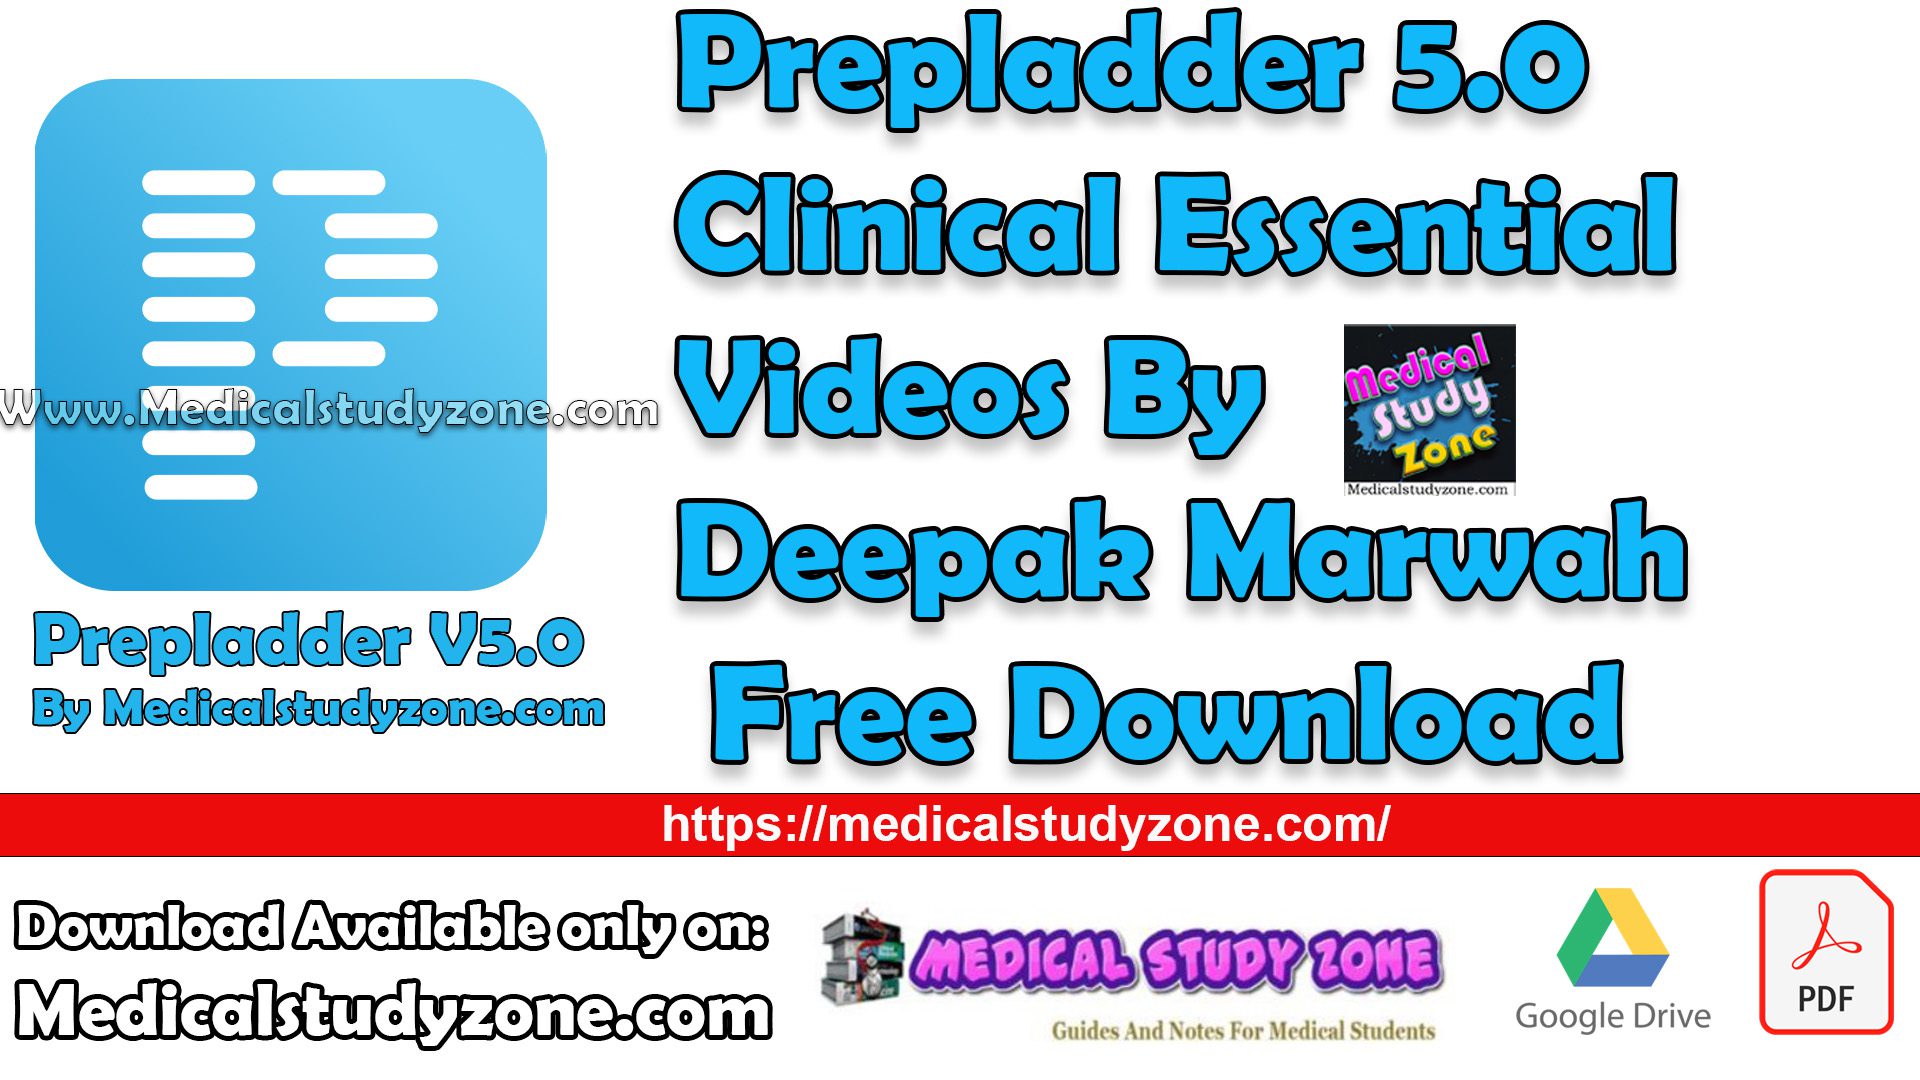 Prepladder 5.0 Clinical Essential Videos By Deepak Marwah Free Download